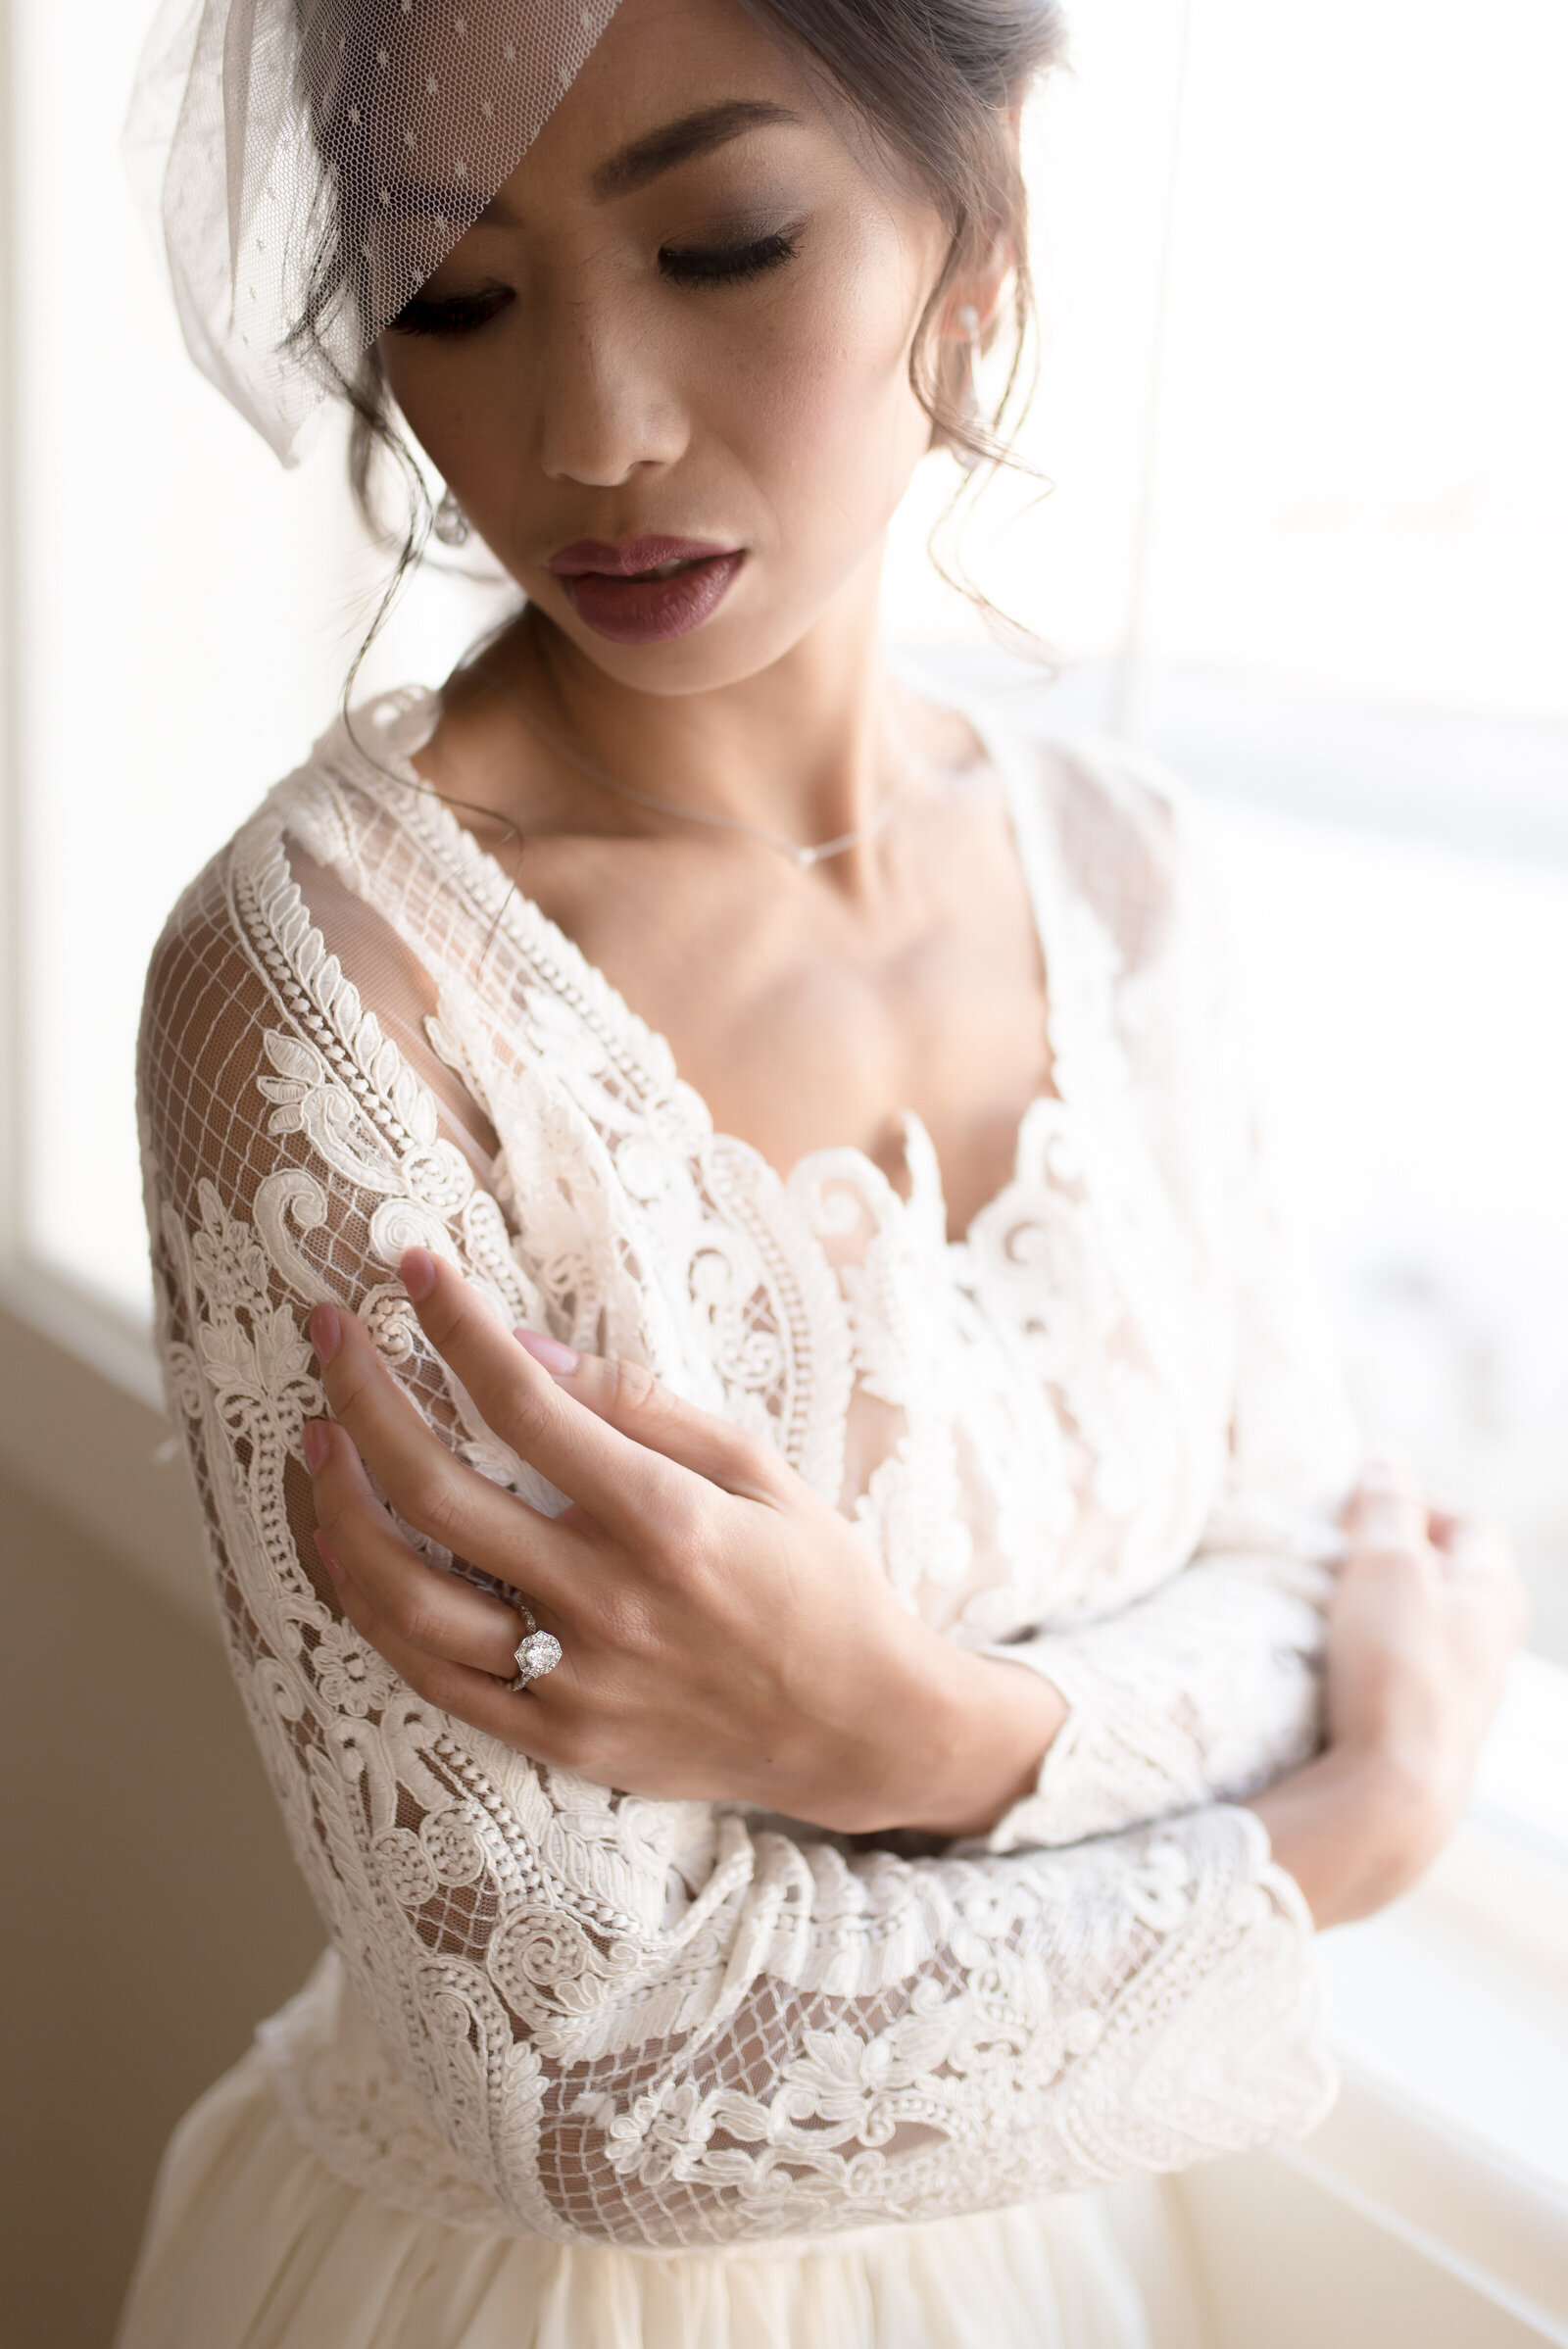 European Classic Romantic Timeless Stunning Bridal Inspiration_0052